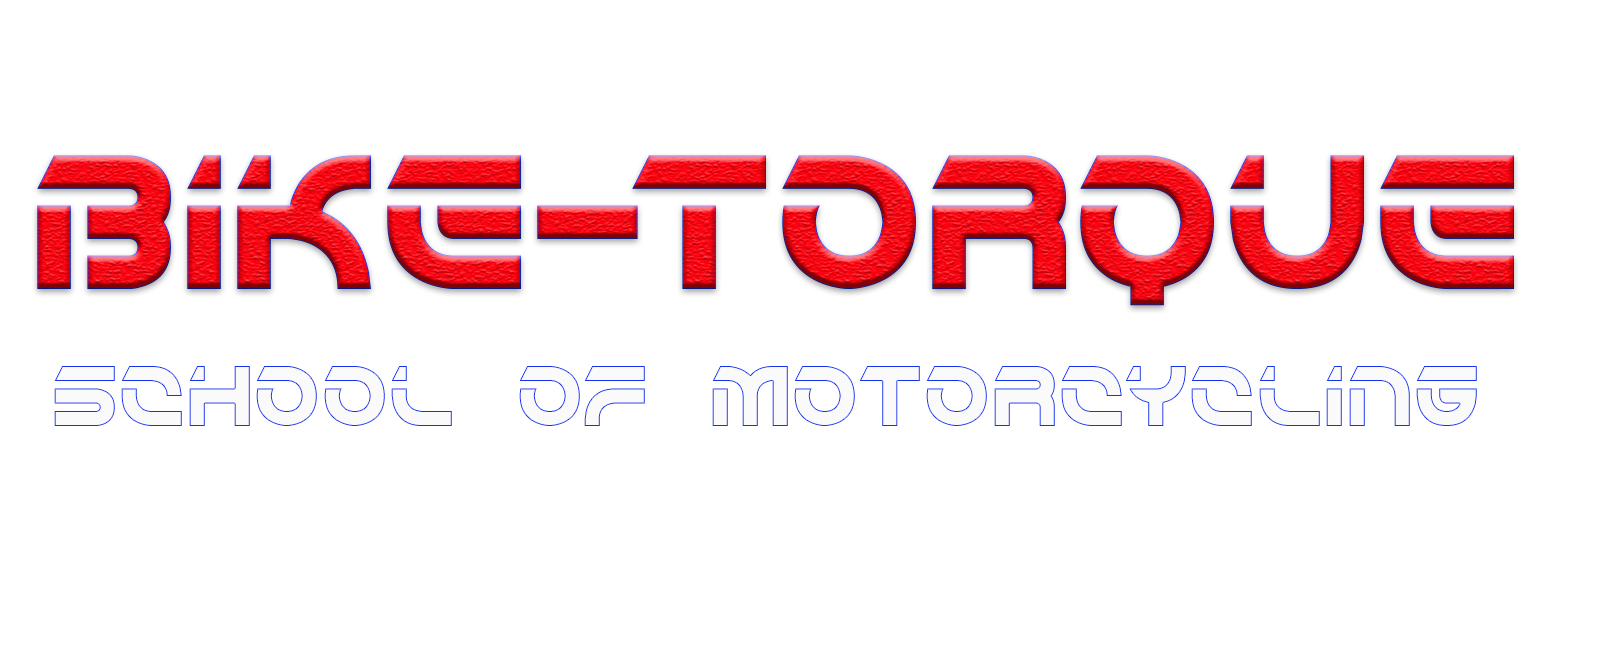 Bike-Torque School of Motorcycling logo